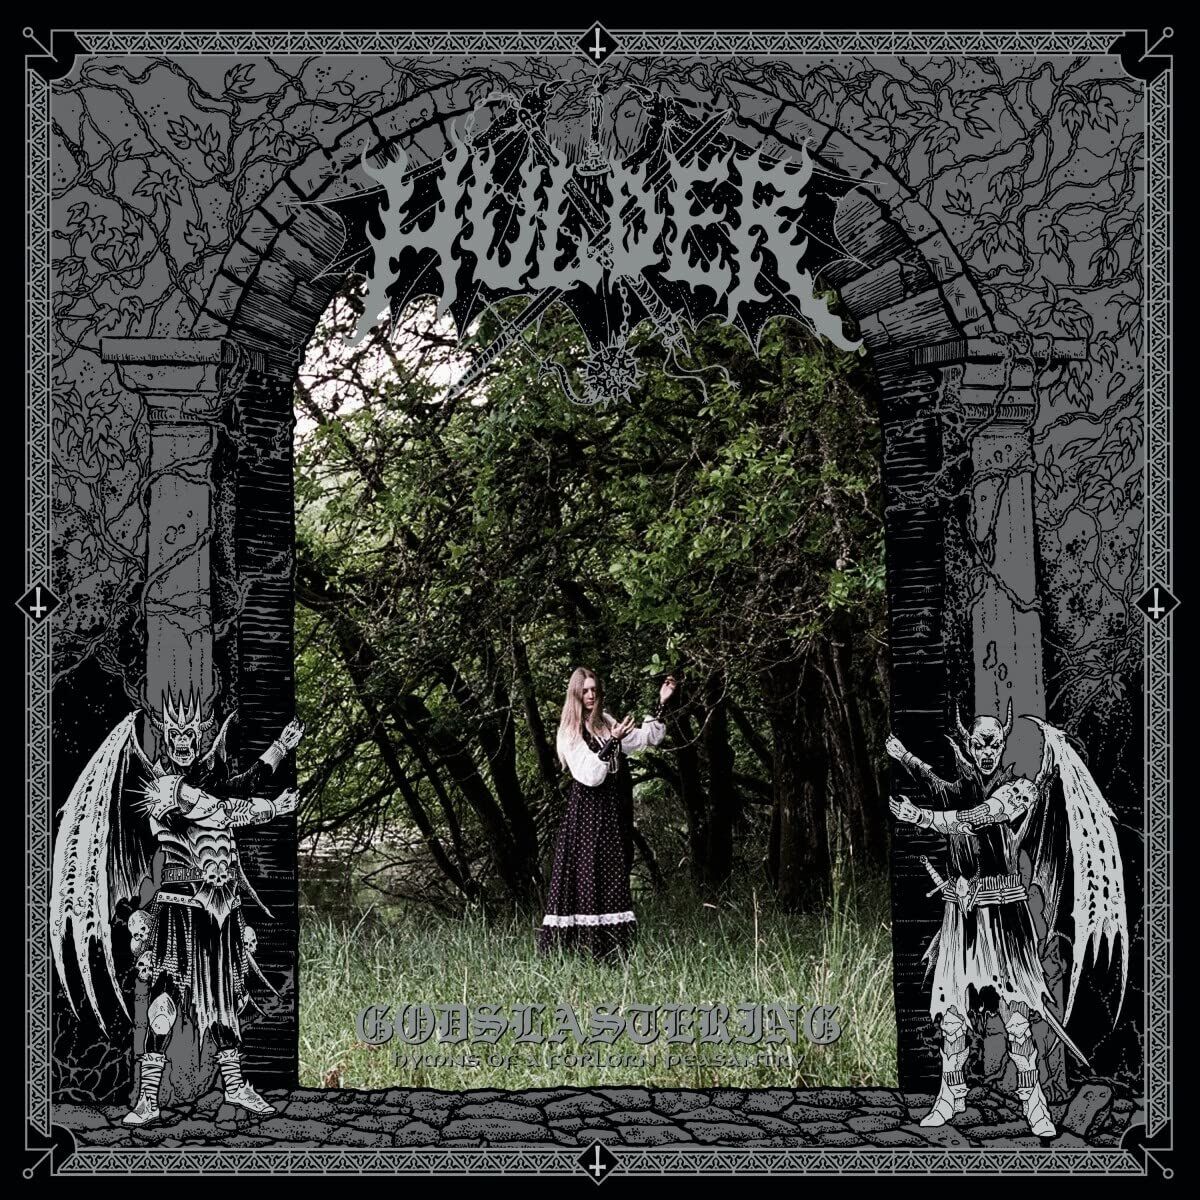 Hulder Godslastering: Hymns of a forlorn peasantry LP multicolor